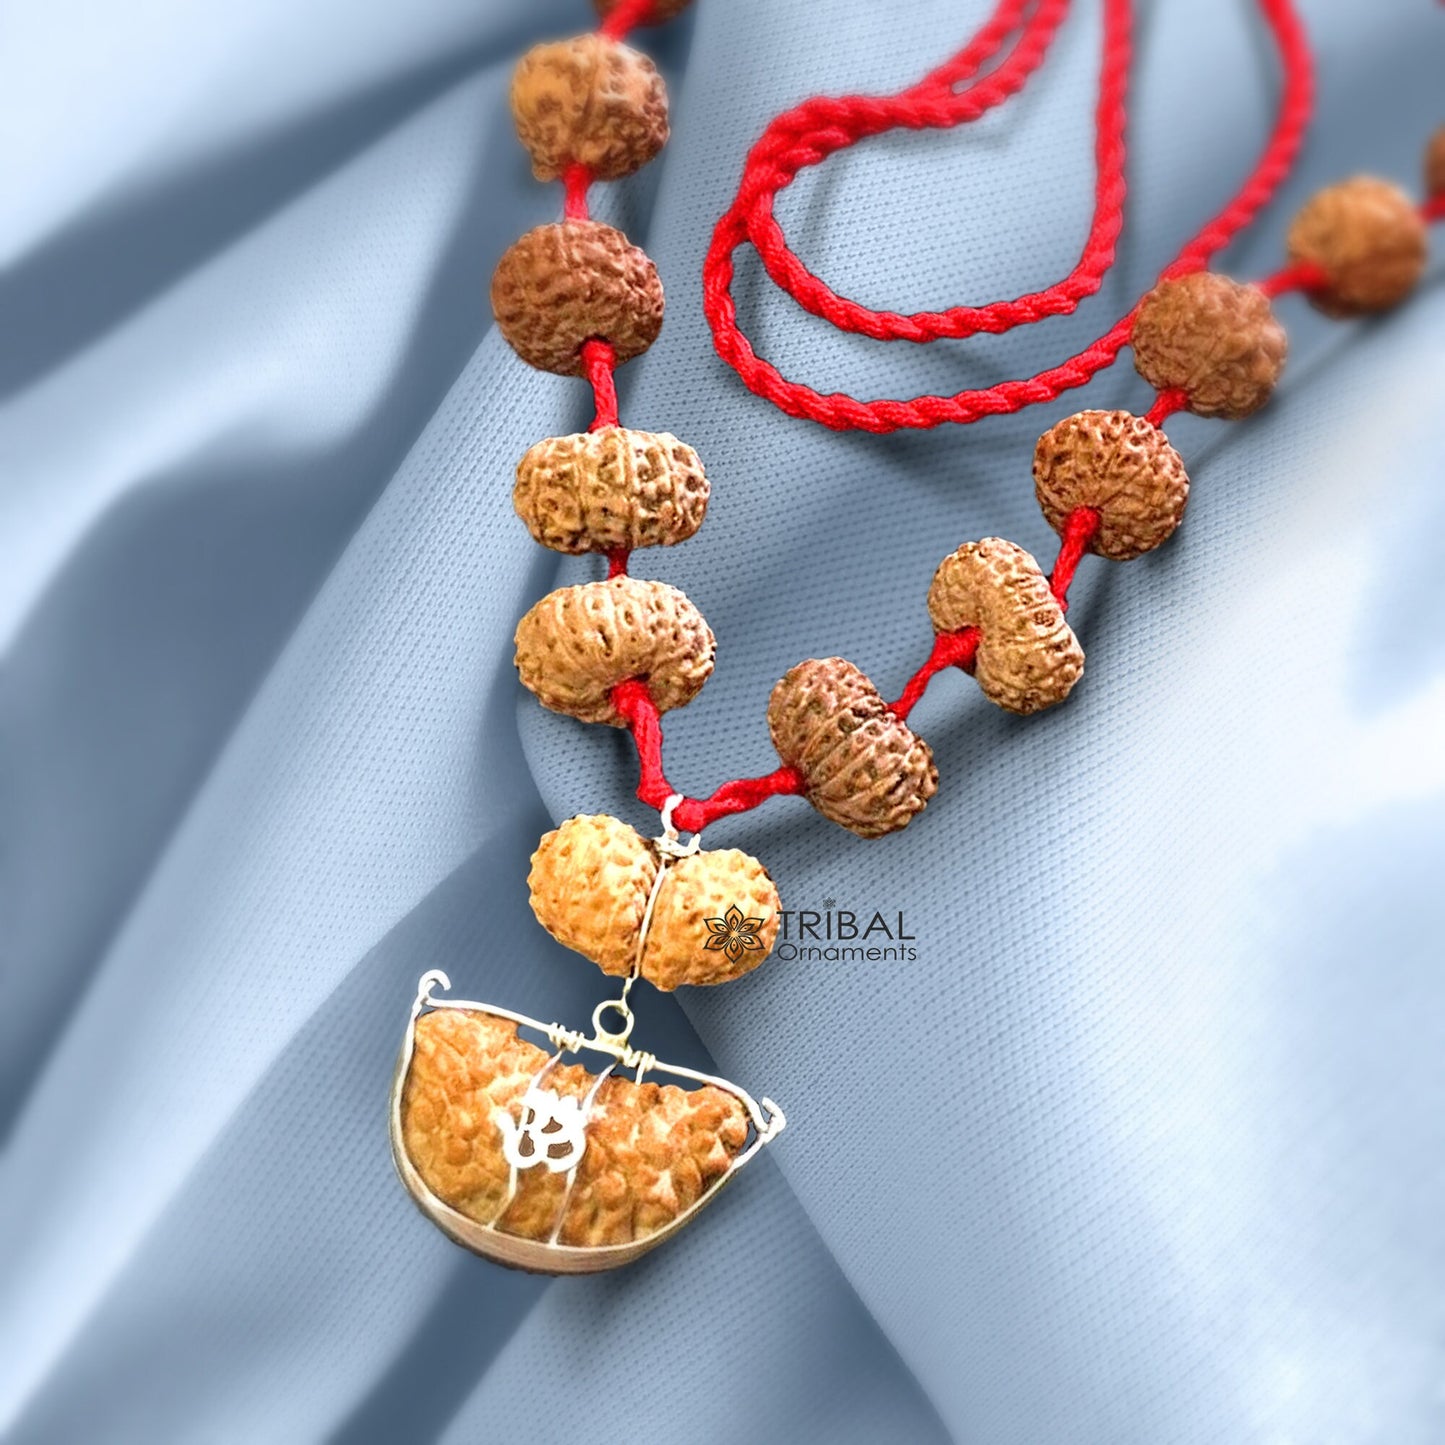 Siddha Rudraksha Mala1 to 14 Mukhi, Ganesh, Gaurishankar Rudraksha, Medium Size Beads Lab Certified meditation necklace r002 - TRIBAL ORNAMENTS